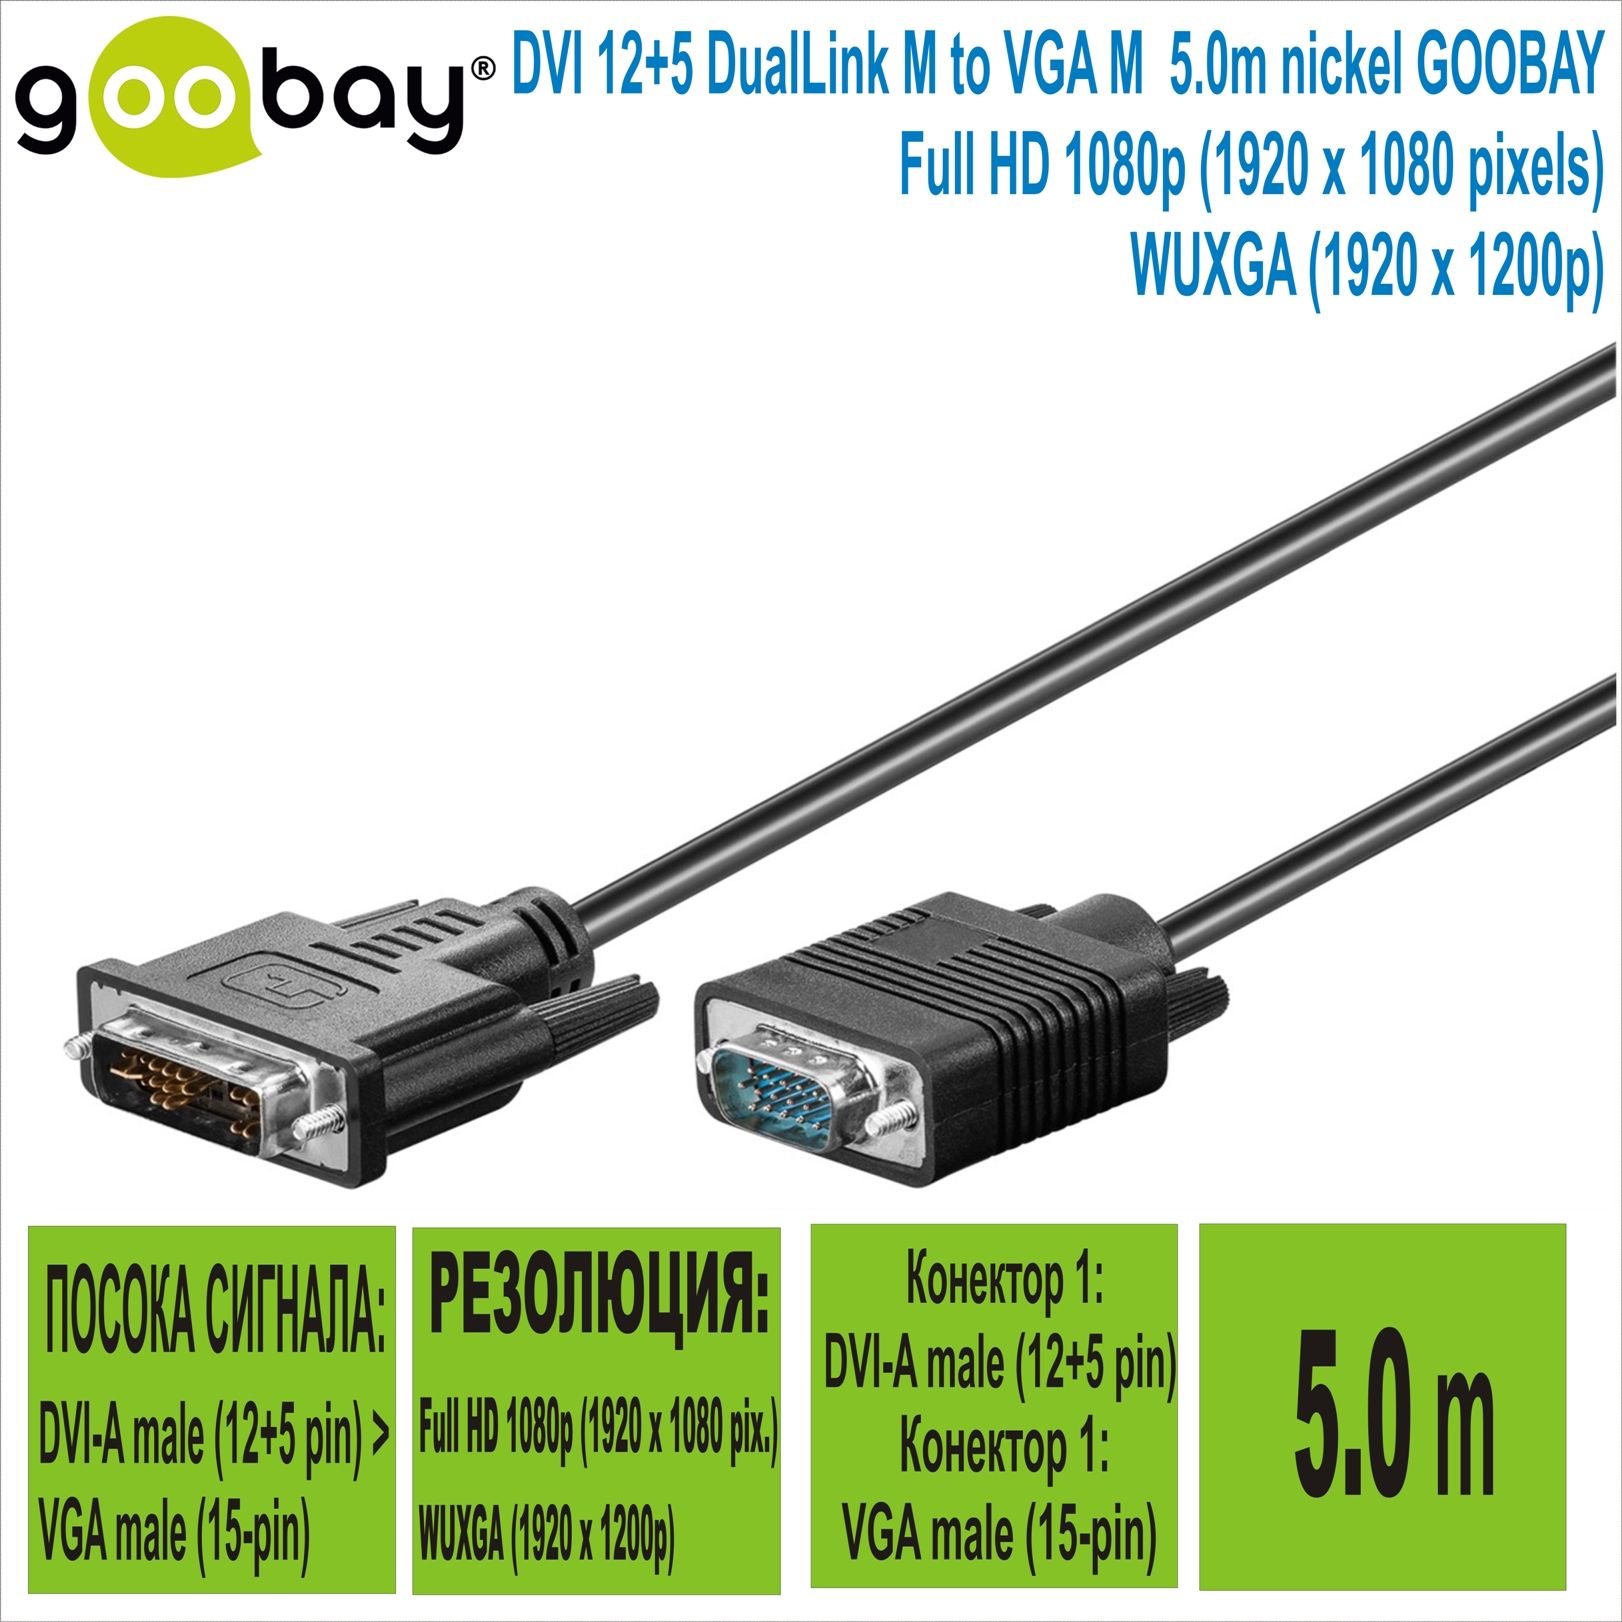 DVI 12+5 DualLink M to VGA M  5.0m nickel GOOBAY